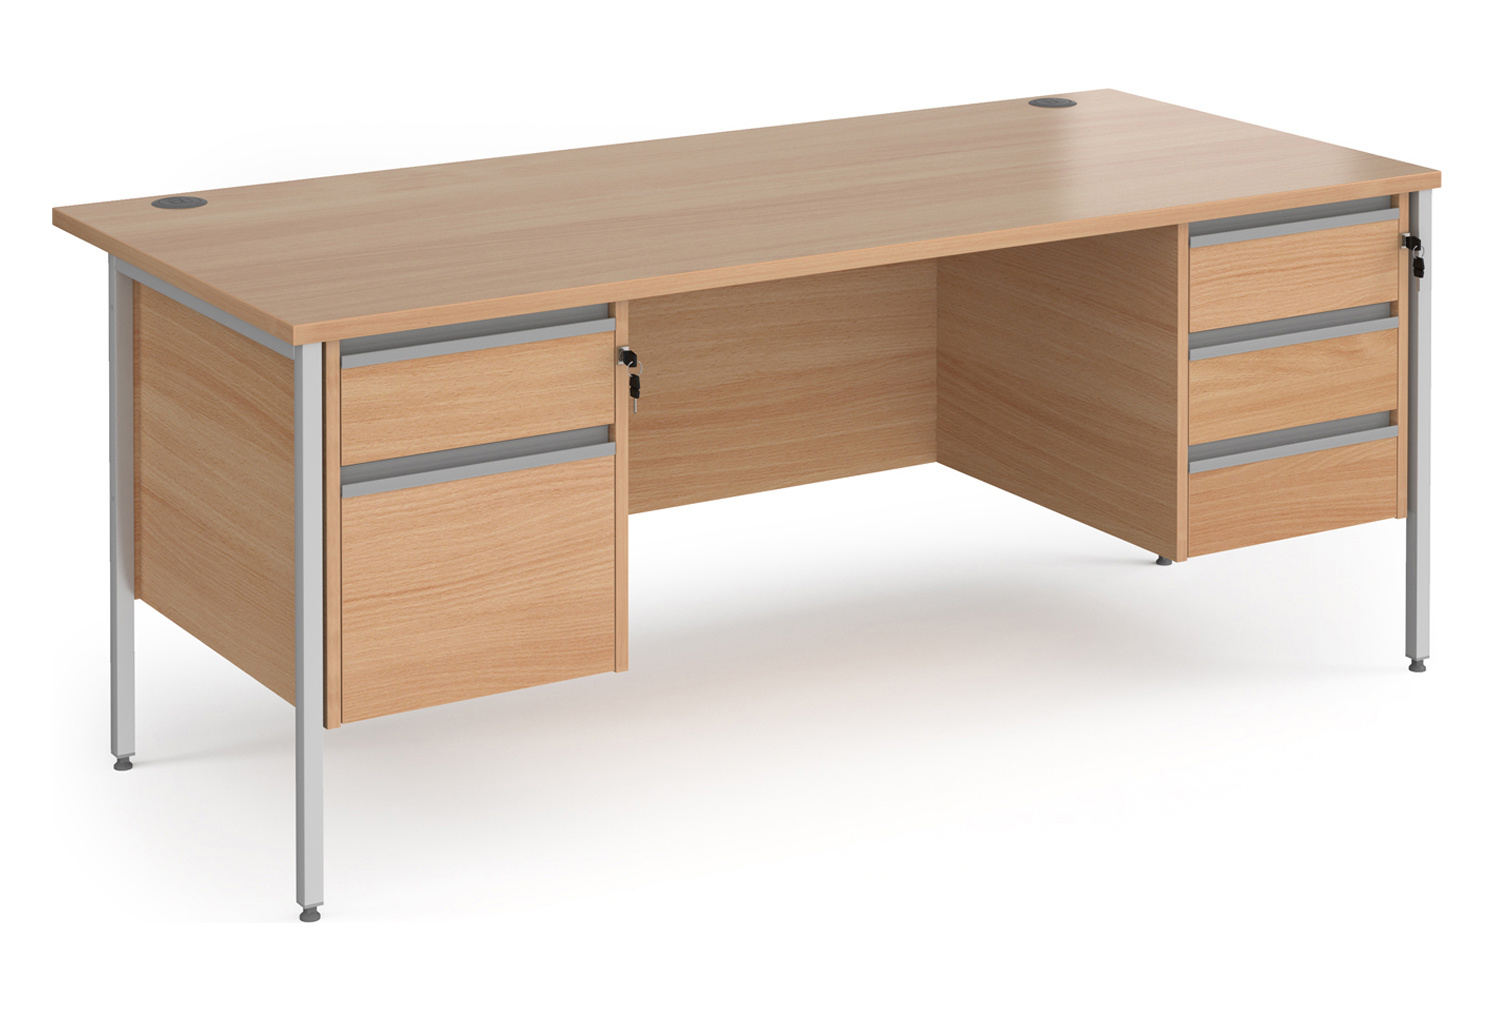 Value Line Classic+ Rectangular H-Leg Office Desk 2+3 Drawers (Silver Leg), 180wx80dx73h (cm), Beech